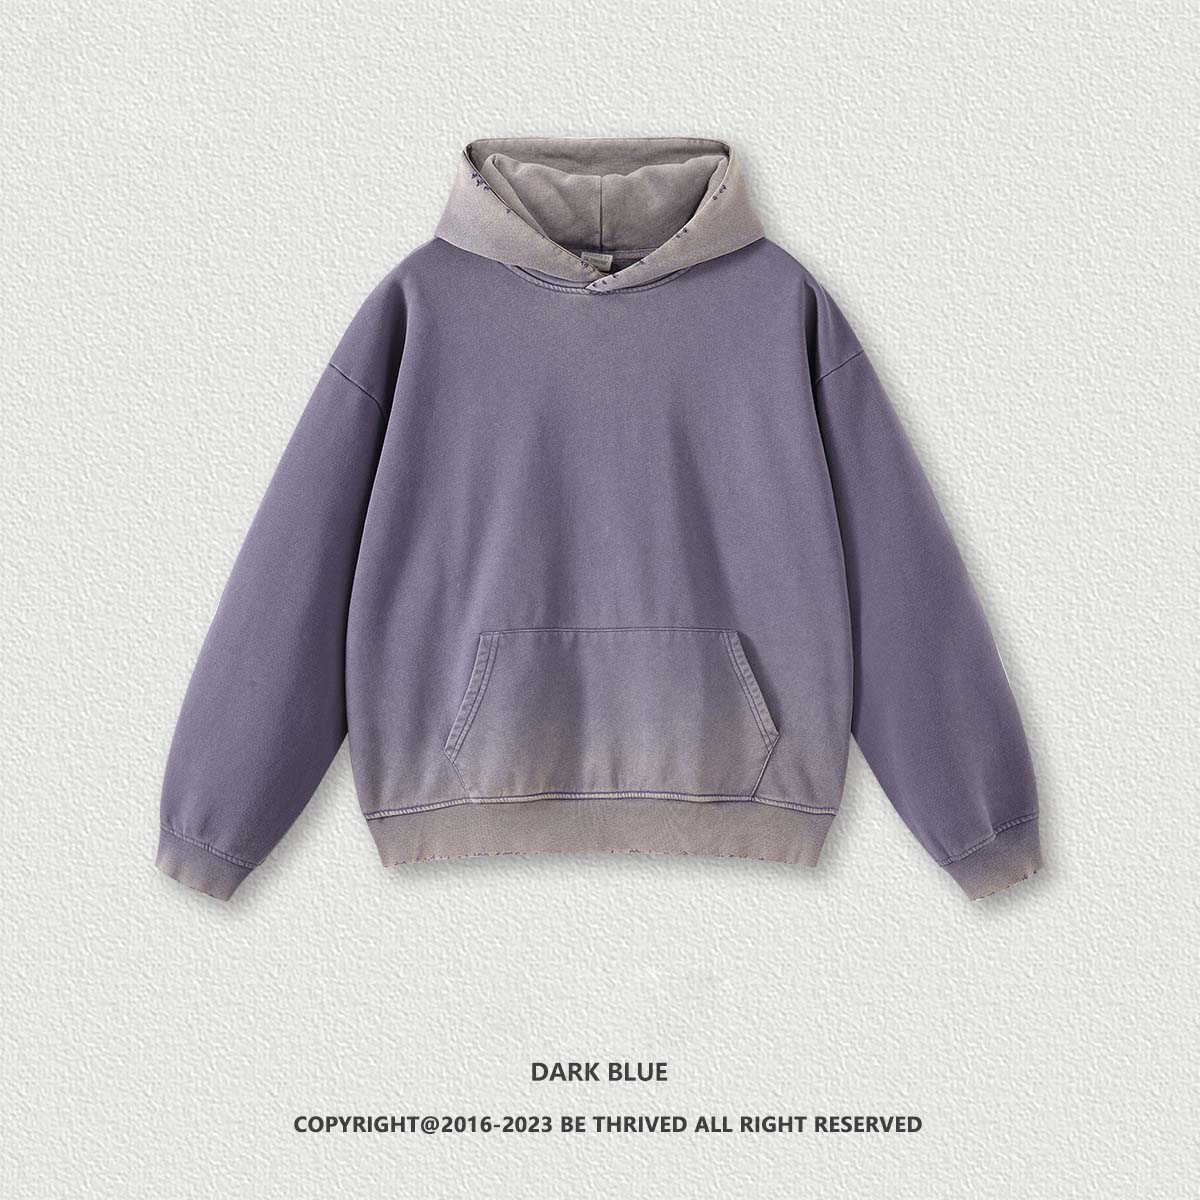 W0151 455sgm American fashion brand heavy washed waste soil short sweatshirt men's loose casual hoodie